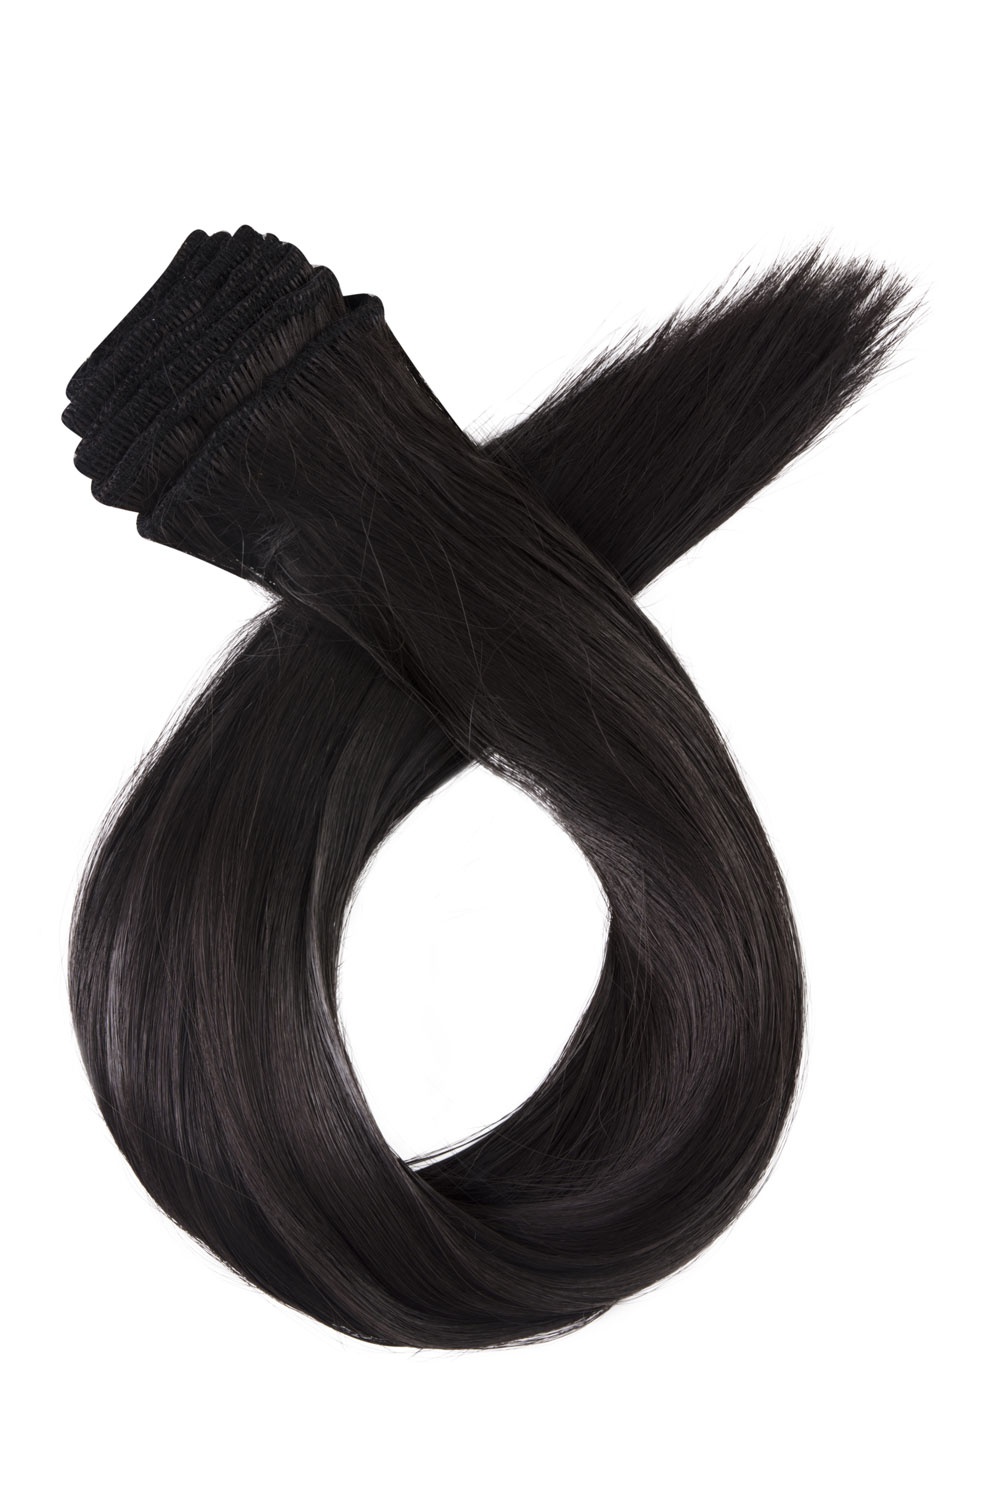 Stredne hnedé clip in vlasy, 60cm, 180g, farba 4